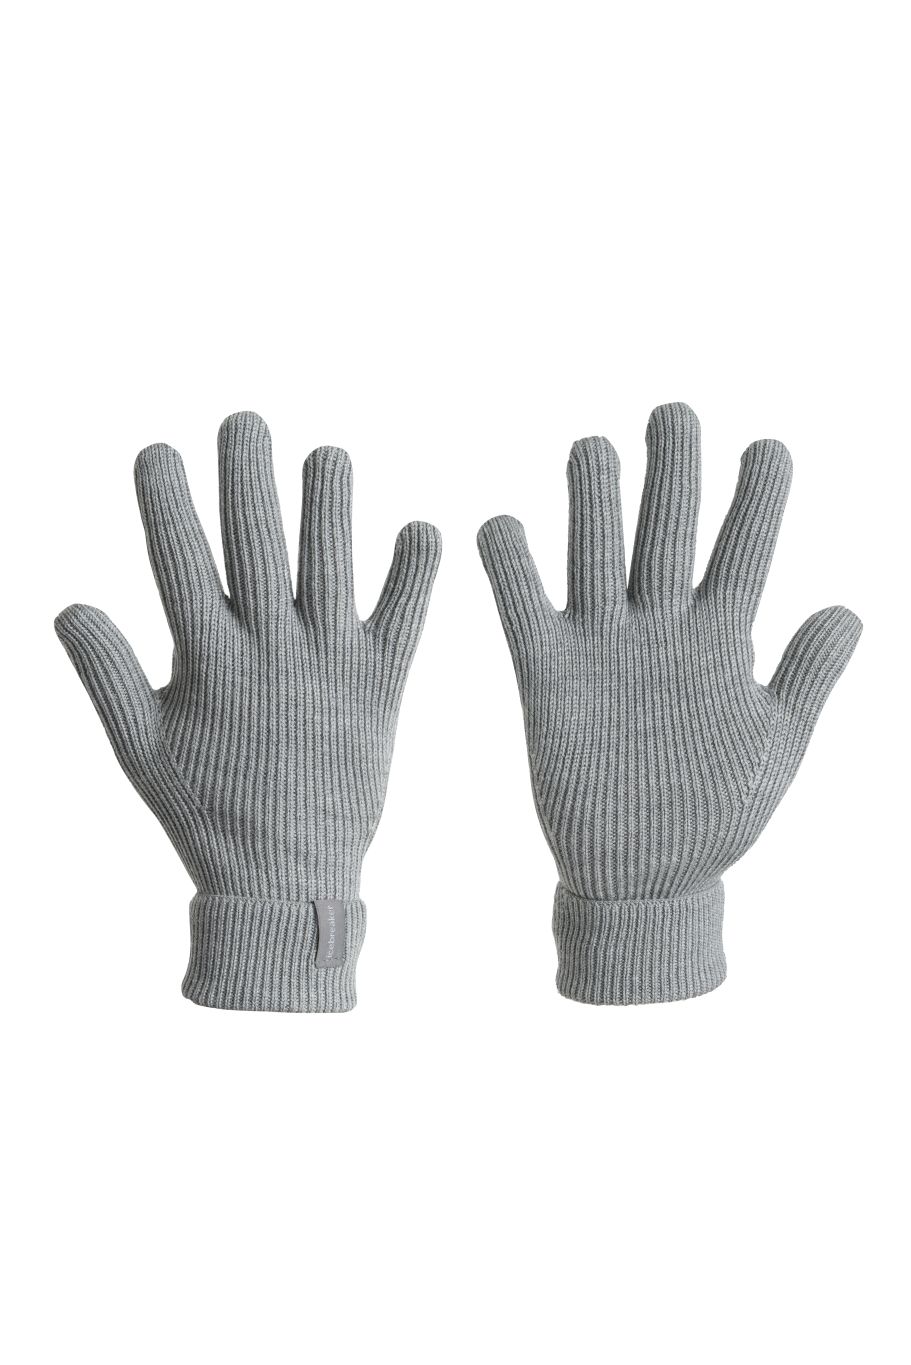 ICEBREAKER Unisex Rixdorf Gloves, Metro Heather (vzorek) velikost: L - bez originální visačky